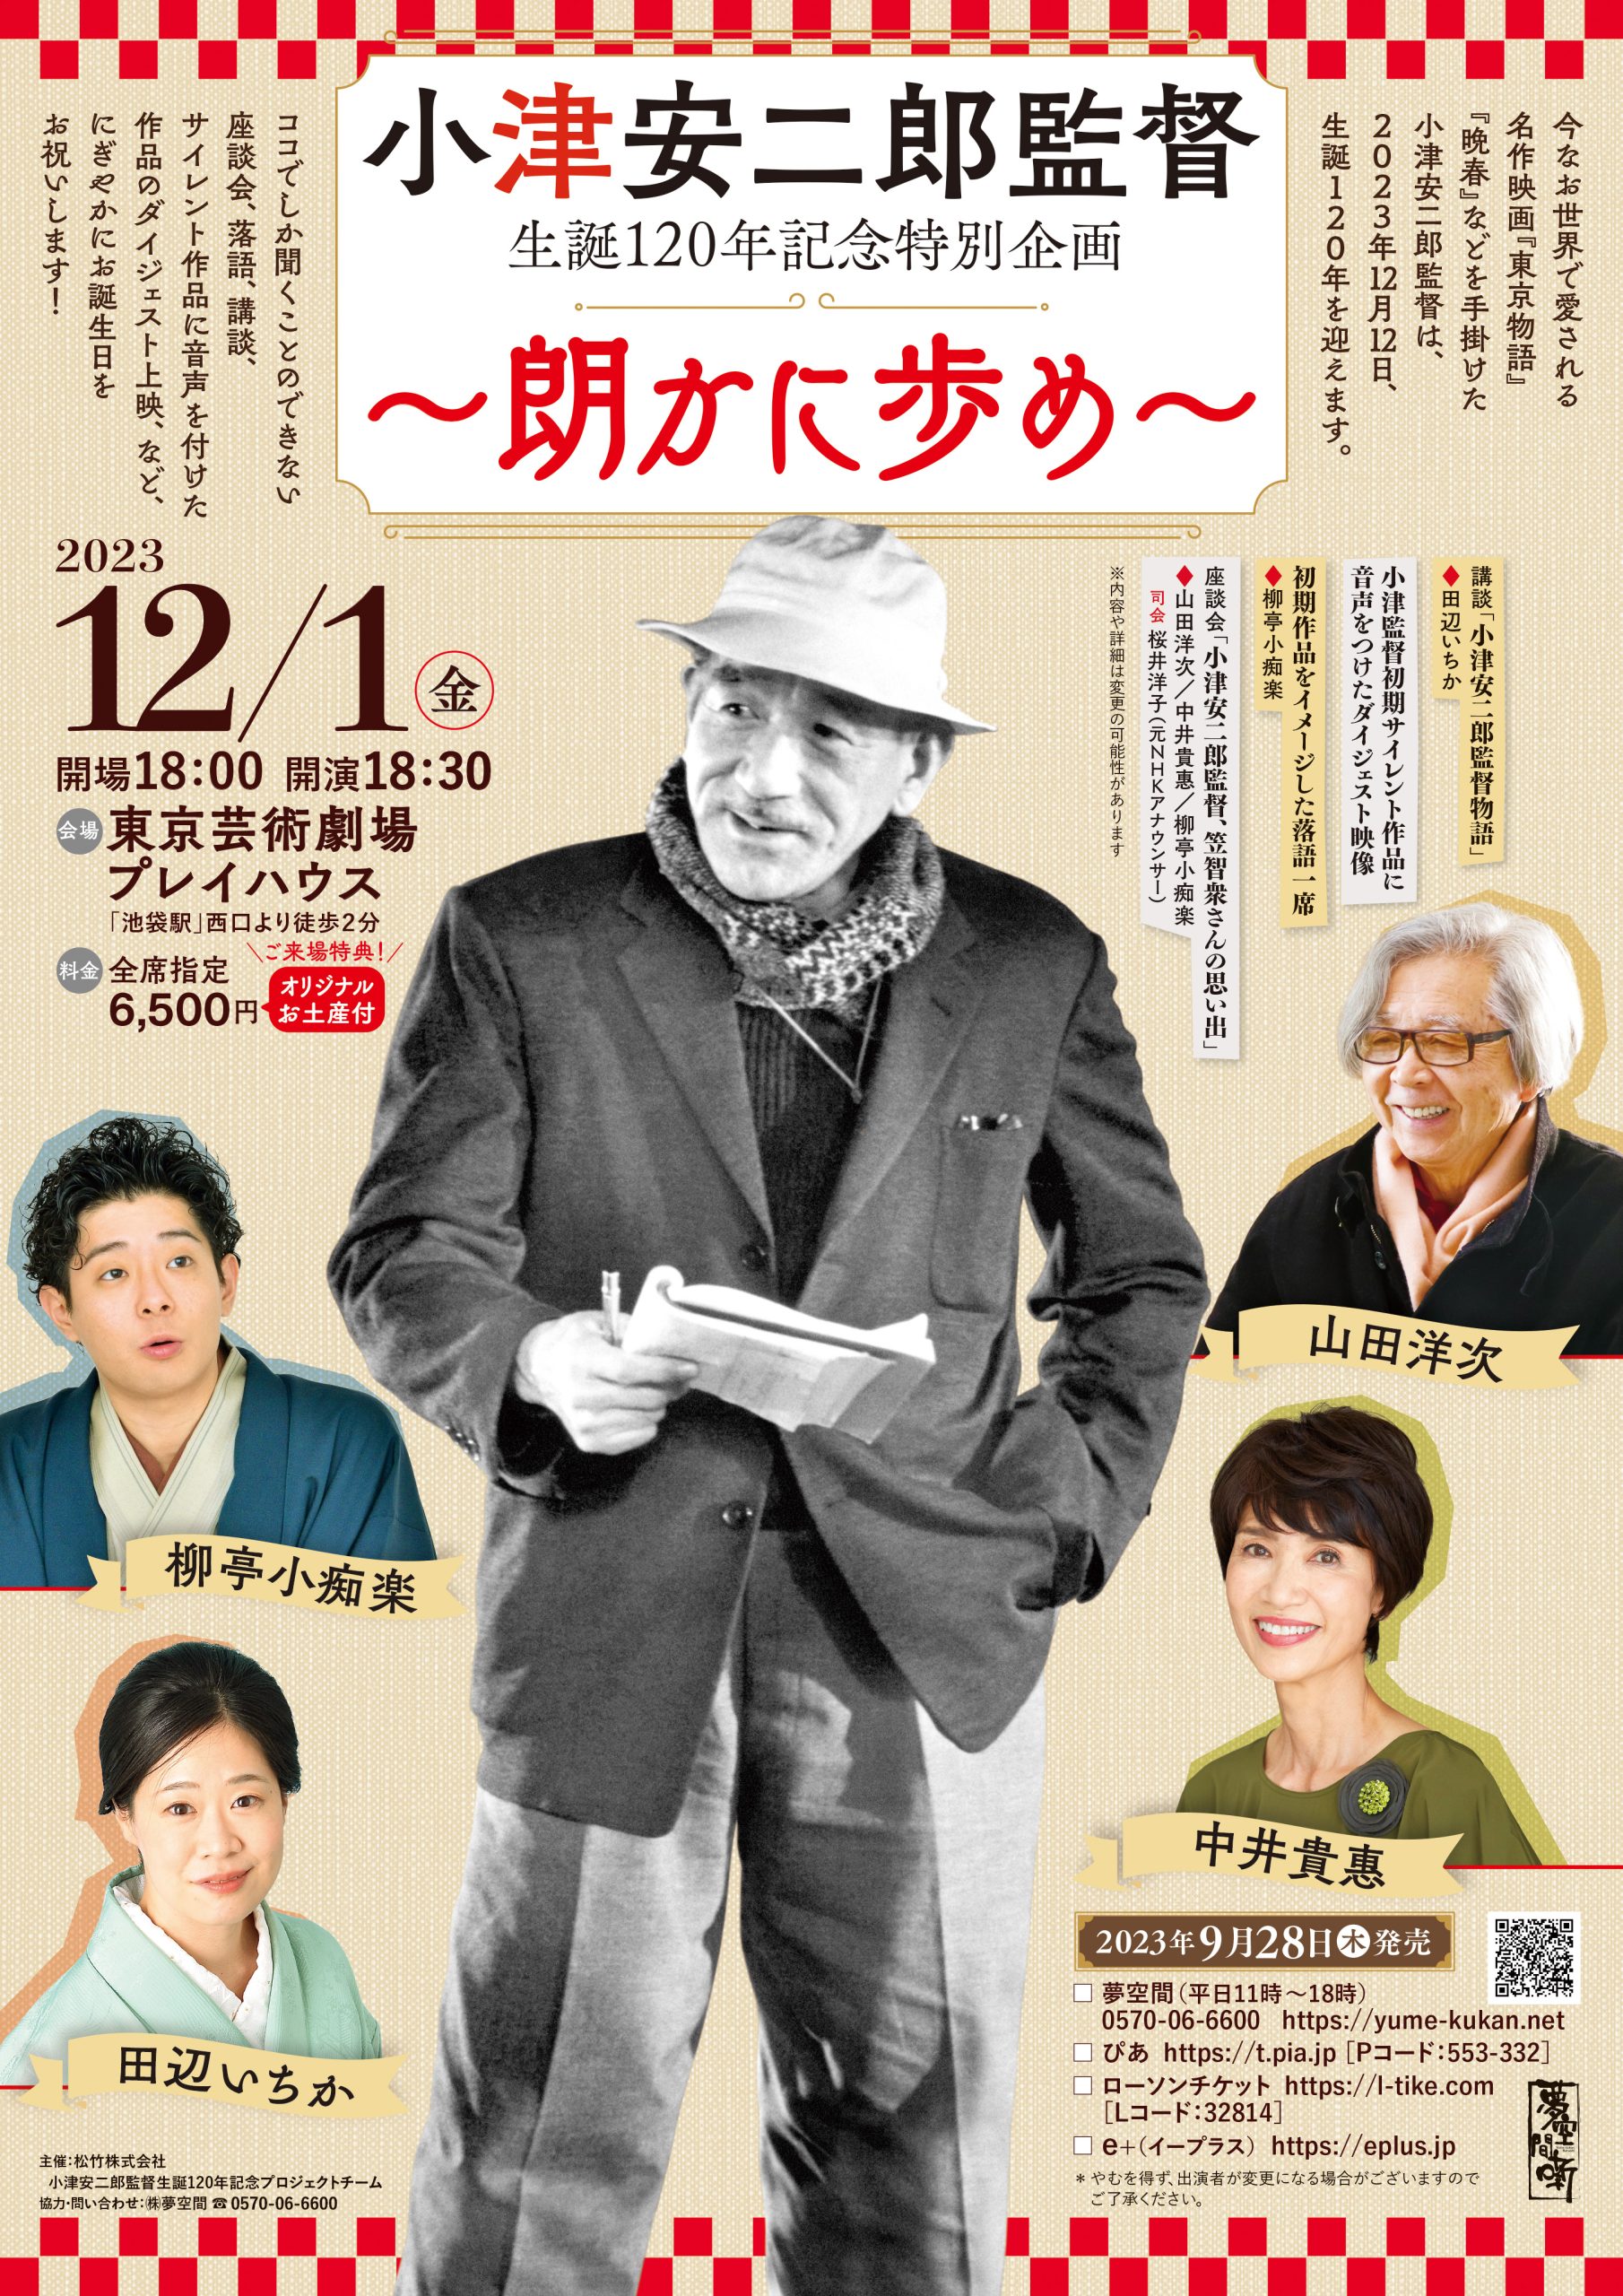 小津安二郎生誕120年記念特別企画「～朗かに歩め～」開催決定！